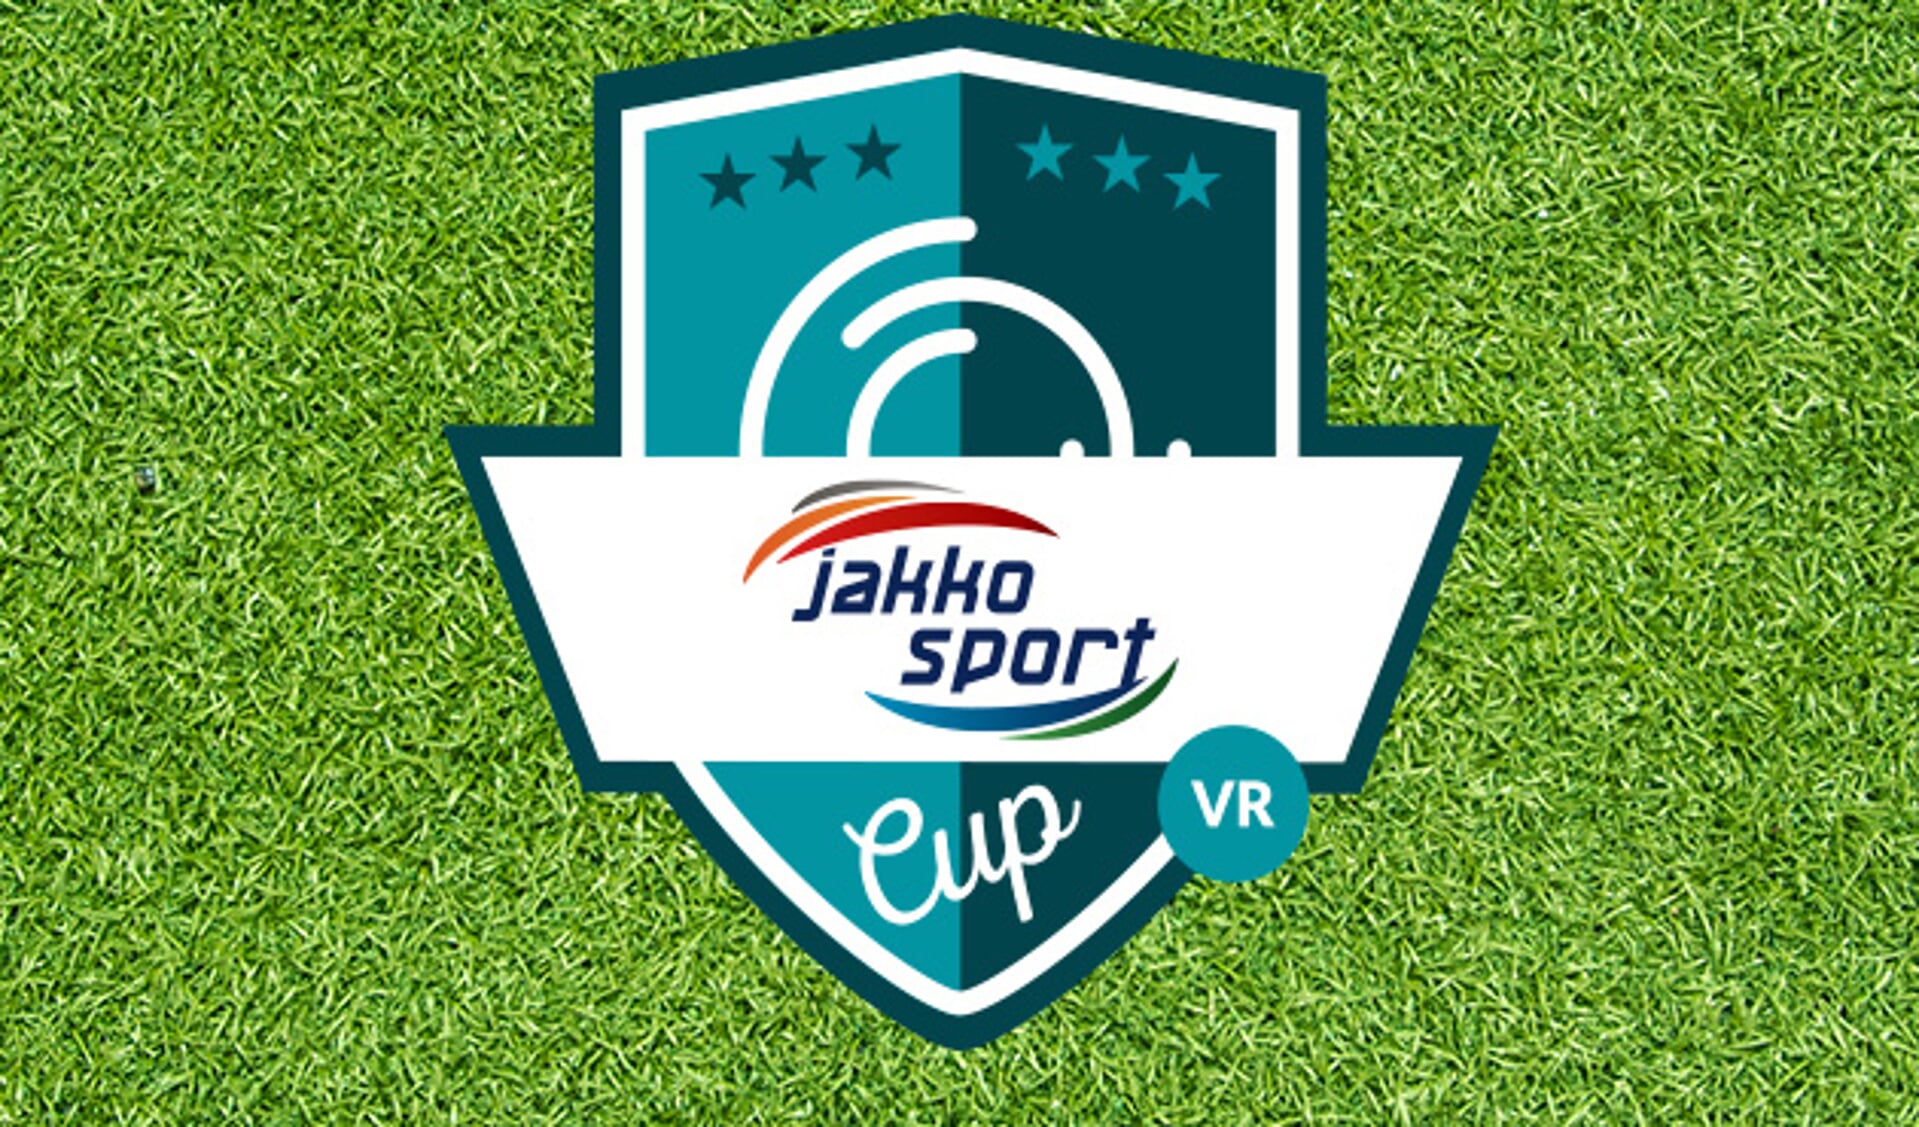 Donderdag 11 april om 12:15 uur live loting kwartfinale EM Cup en halve finale Jakko Sport Cup